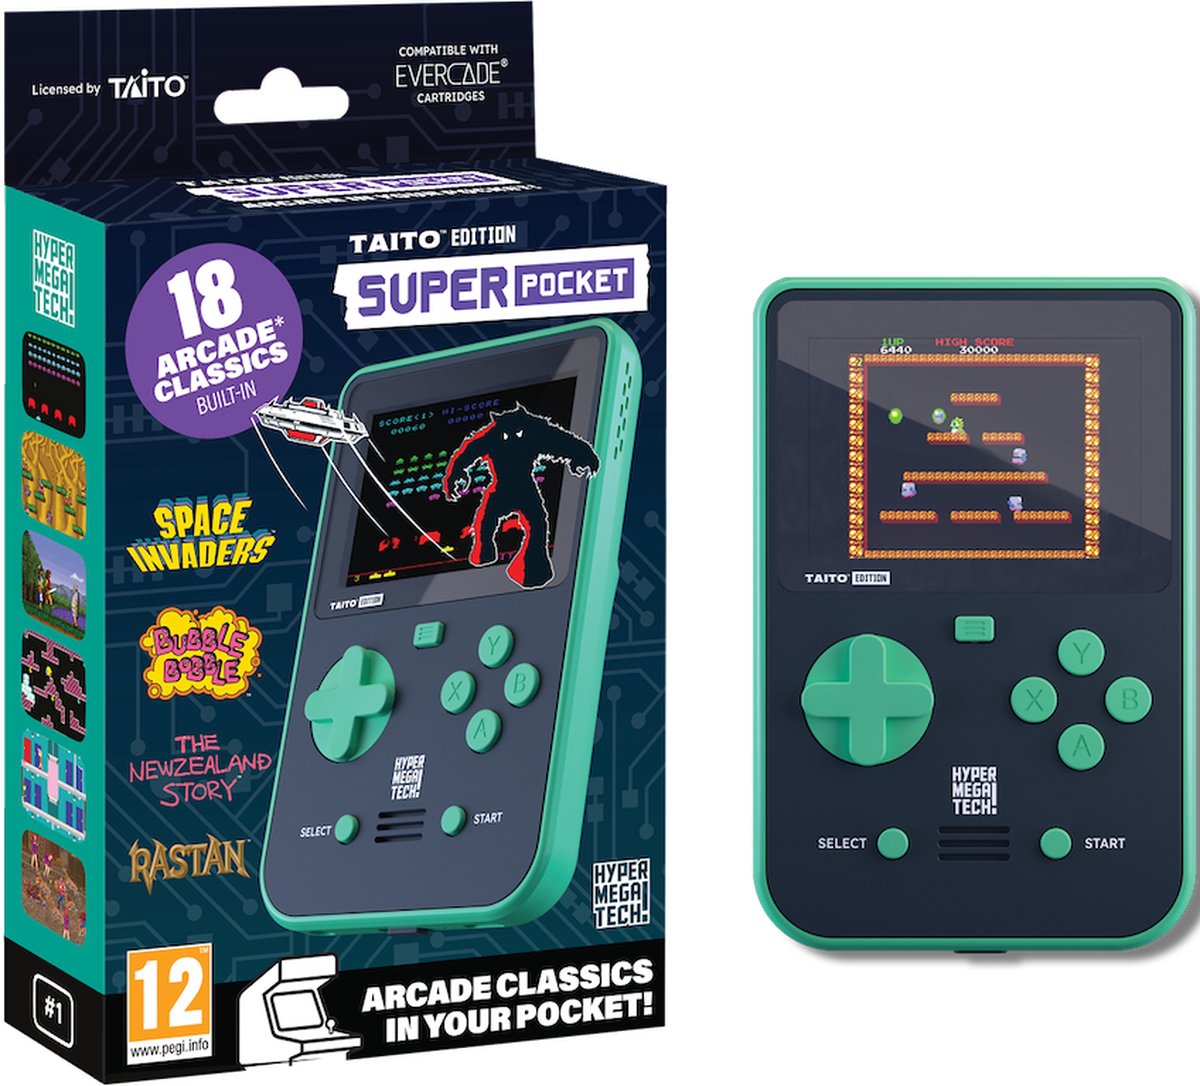 Super Pocket Gaming Handheld - Taito Edition (hardware), HyperMegaTech